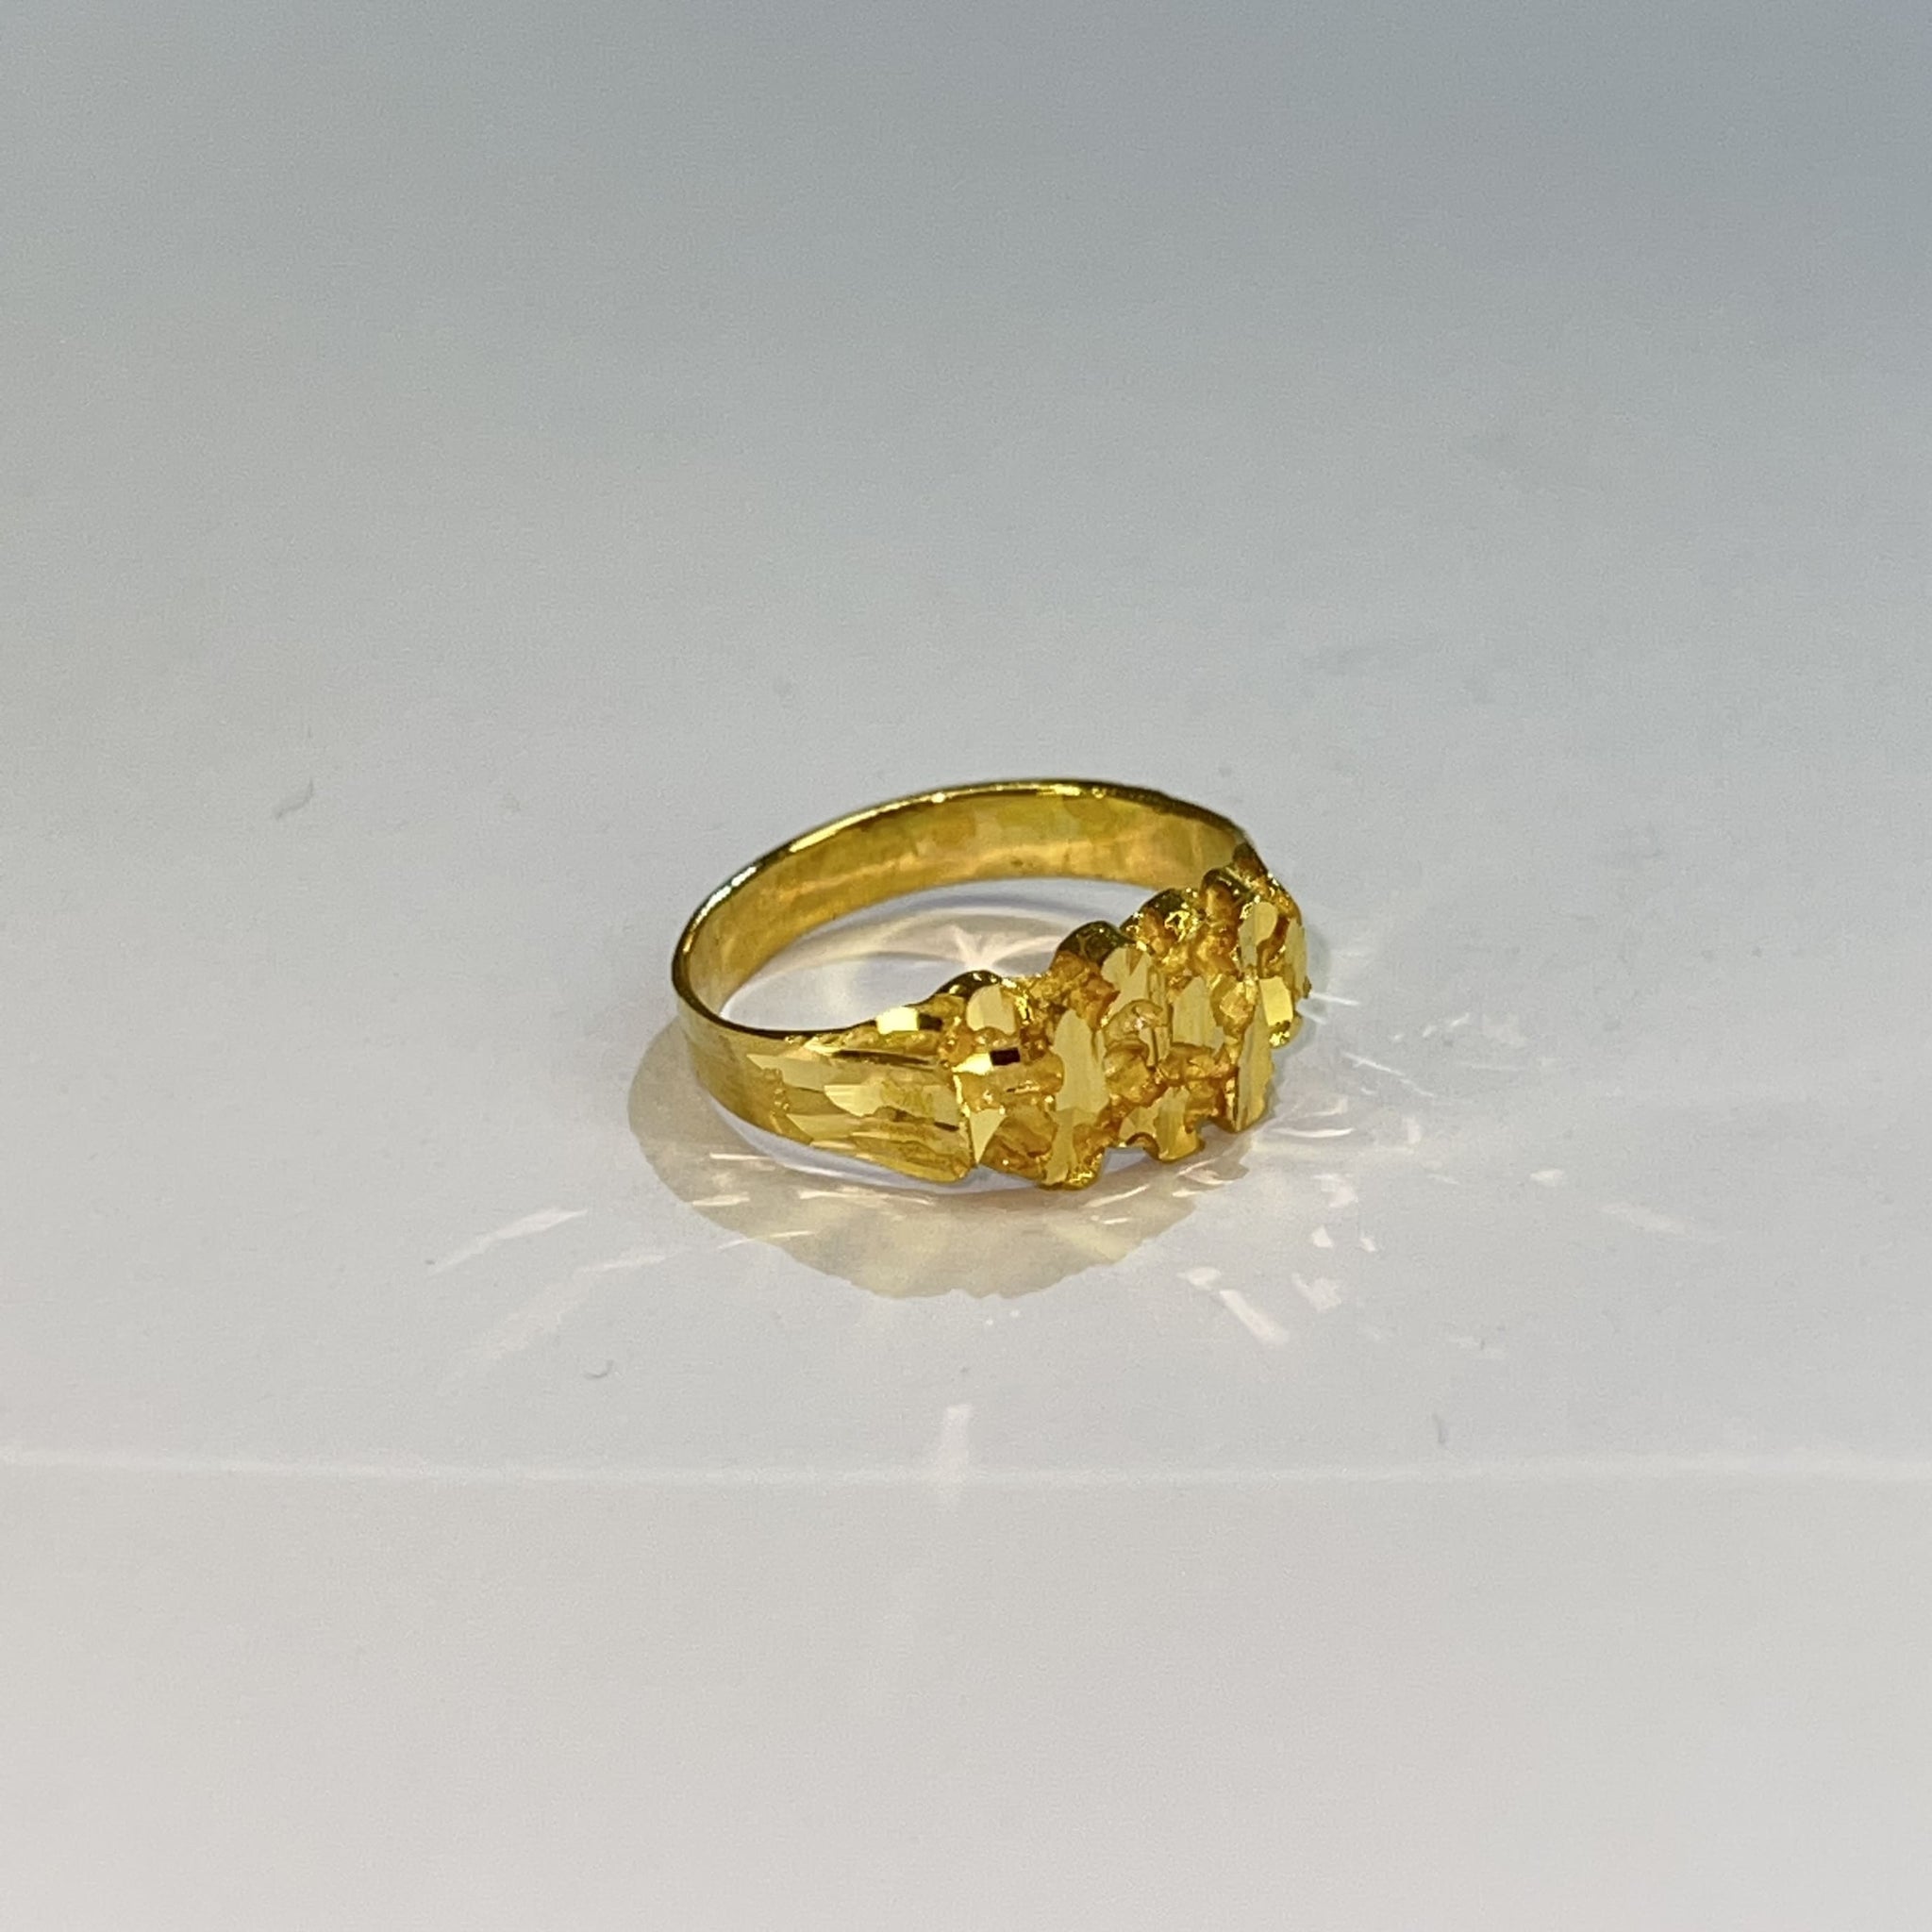 Piet Piet ring - Small Model - 14 carat gold